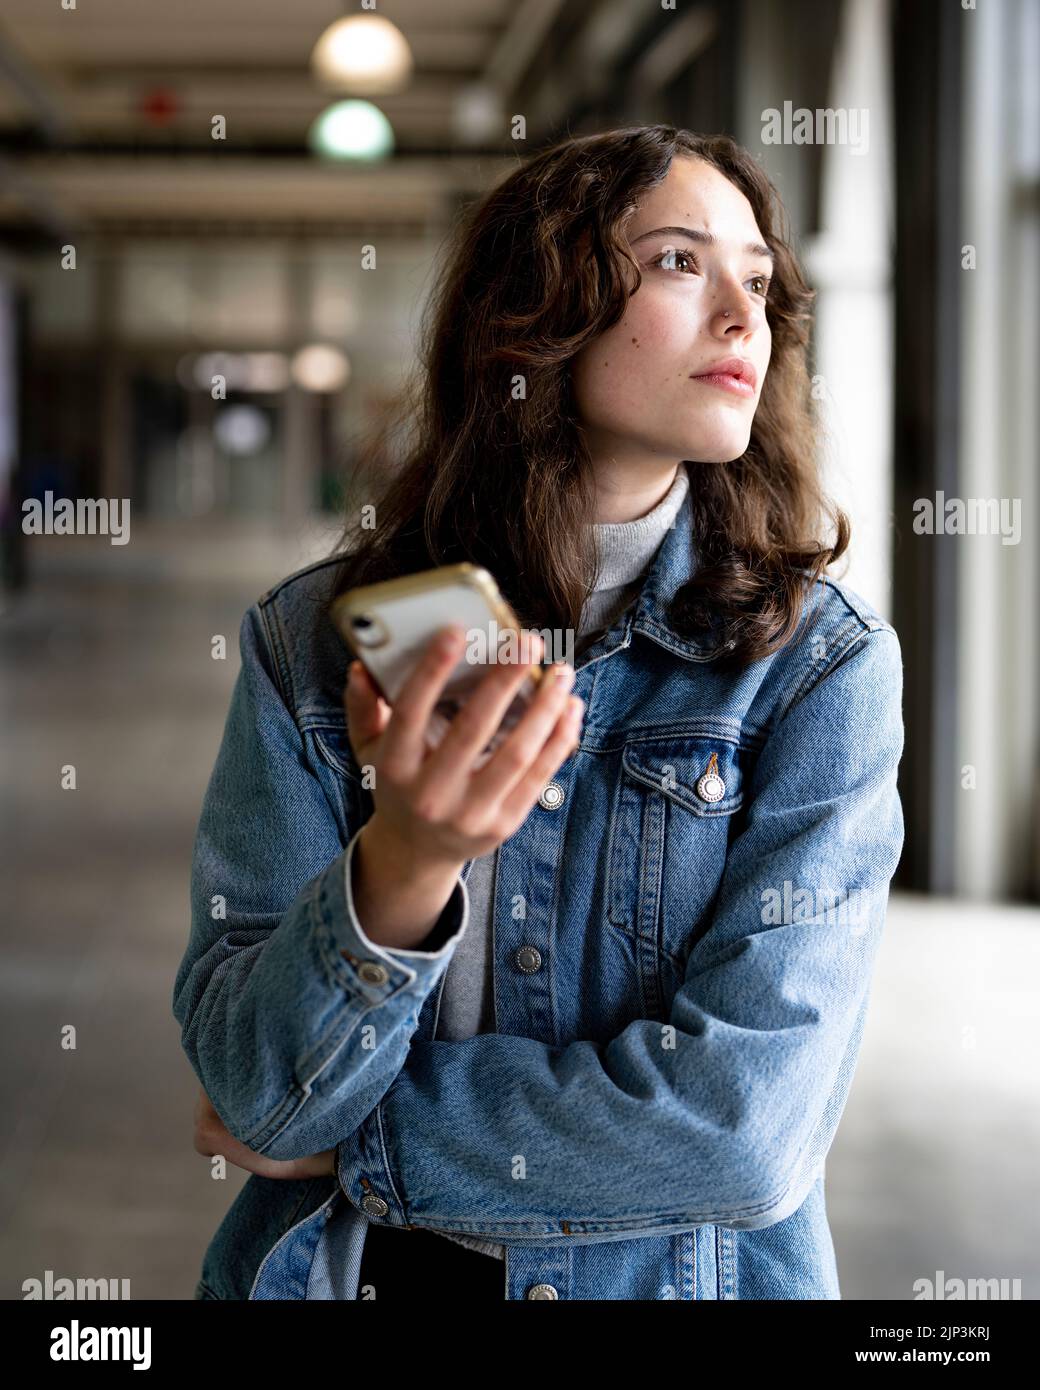 Unposed Portrait of Young Woman Using Smart Phone | Denim Jacket | Hallway Stock Photo